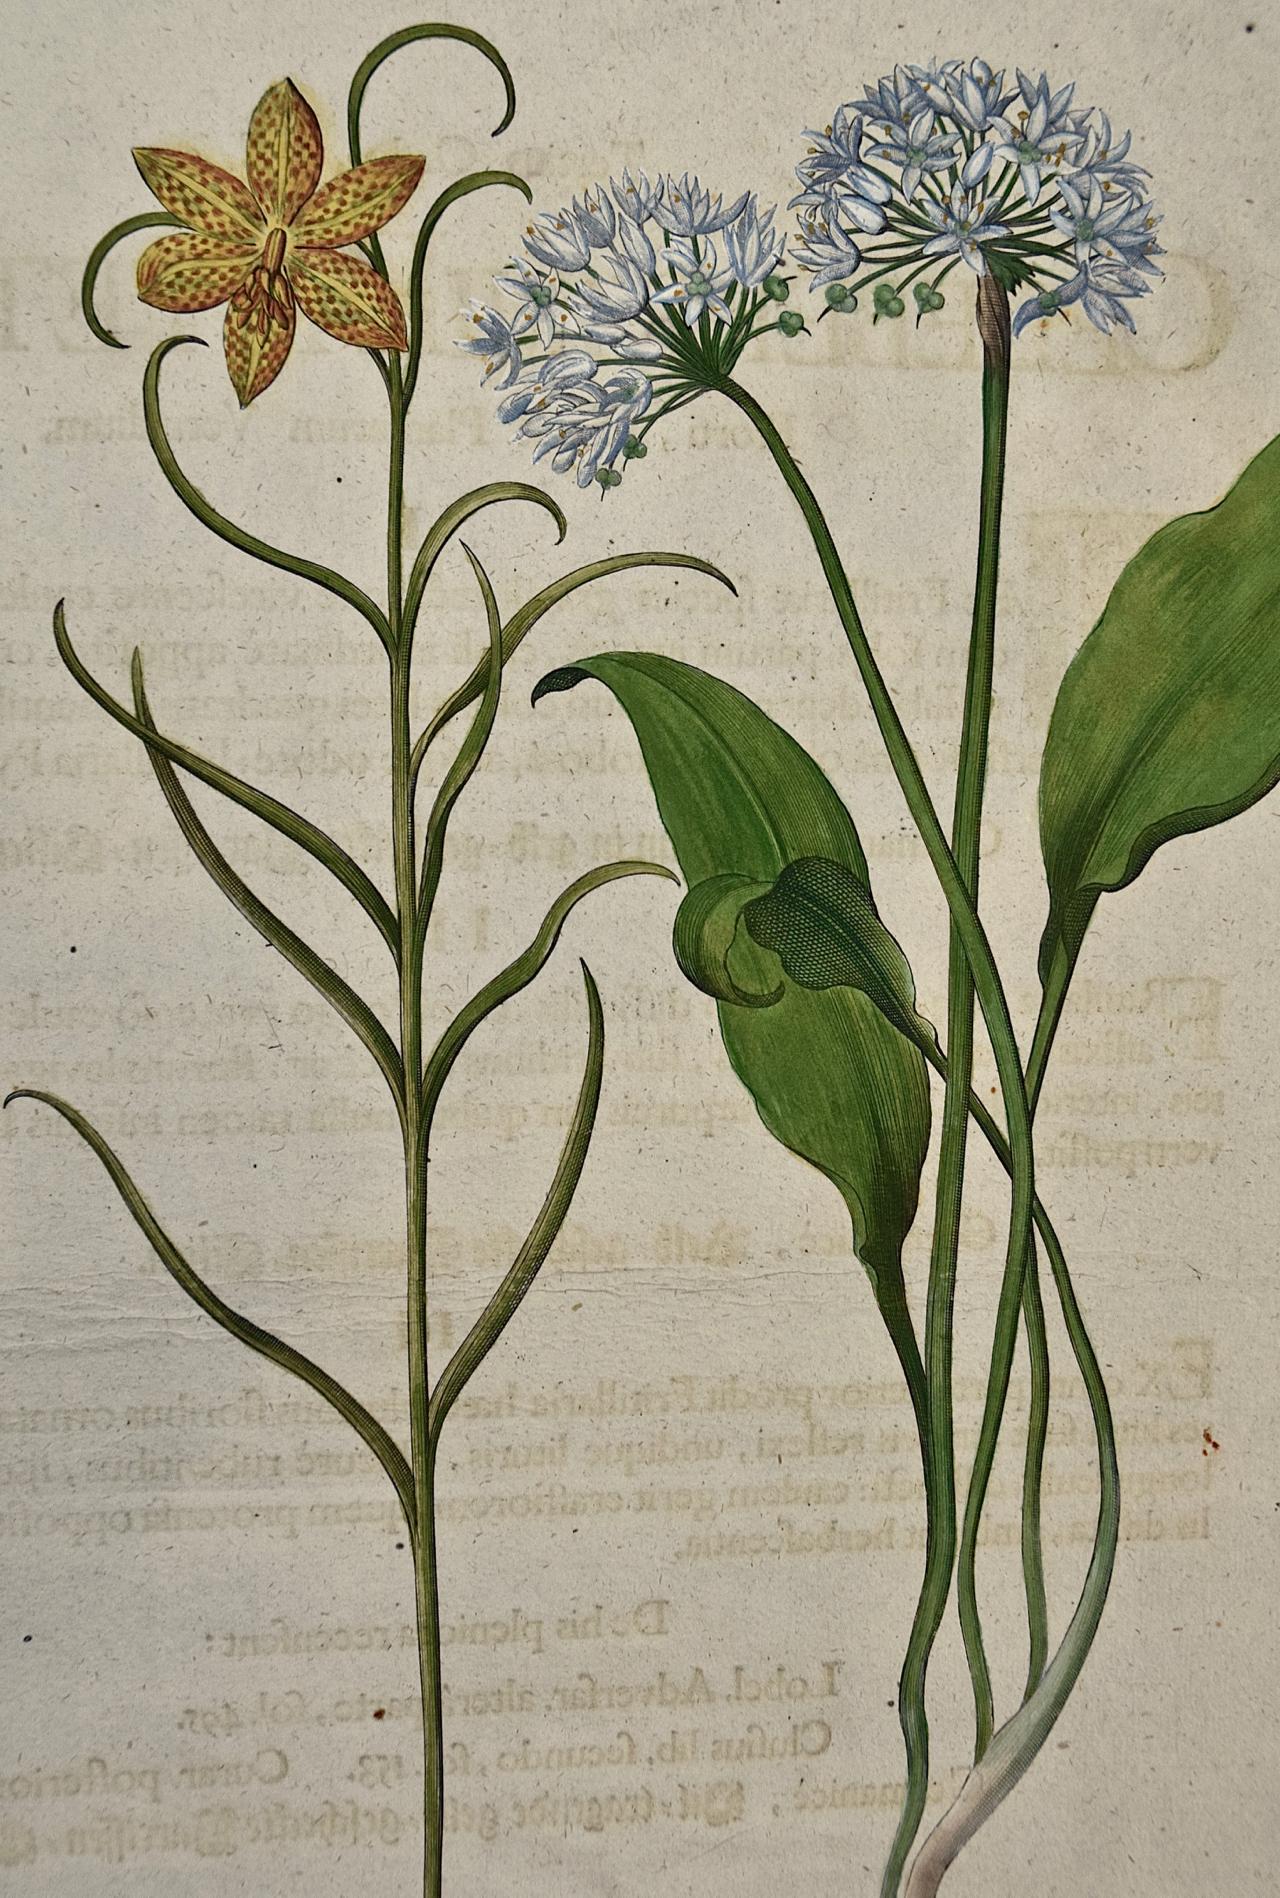 basilius besler botanical prints